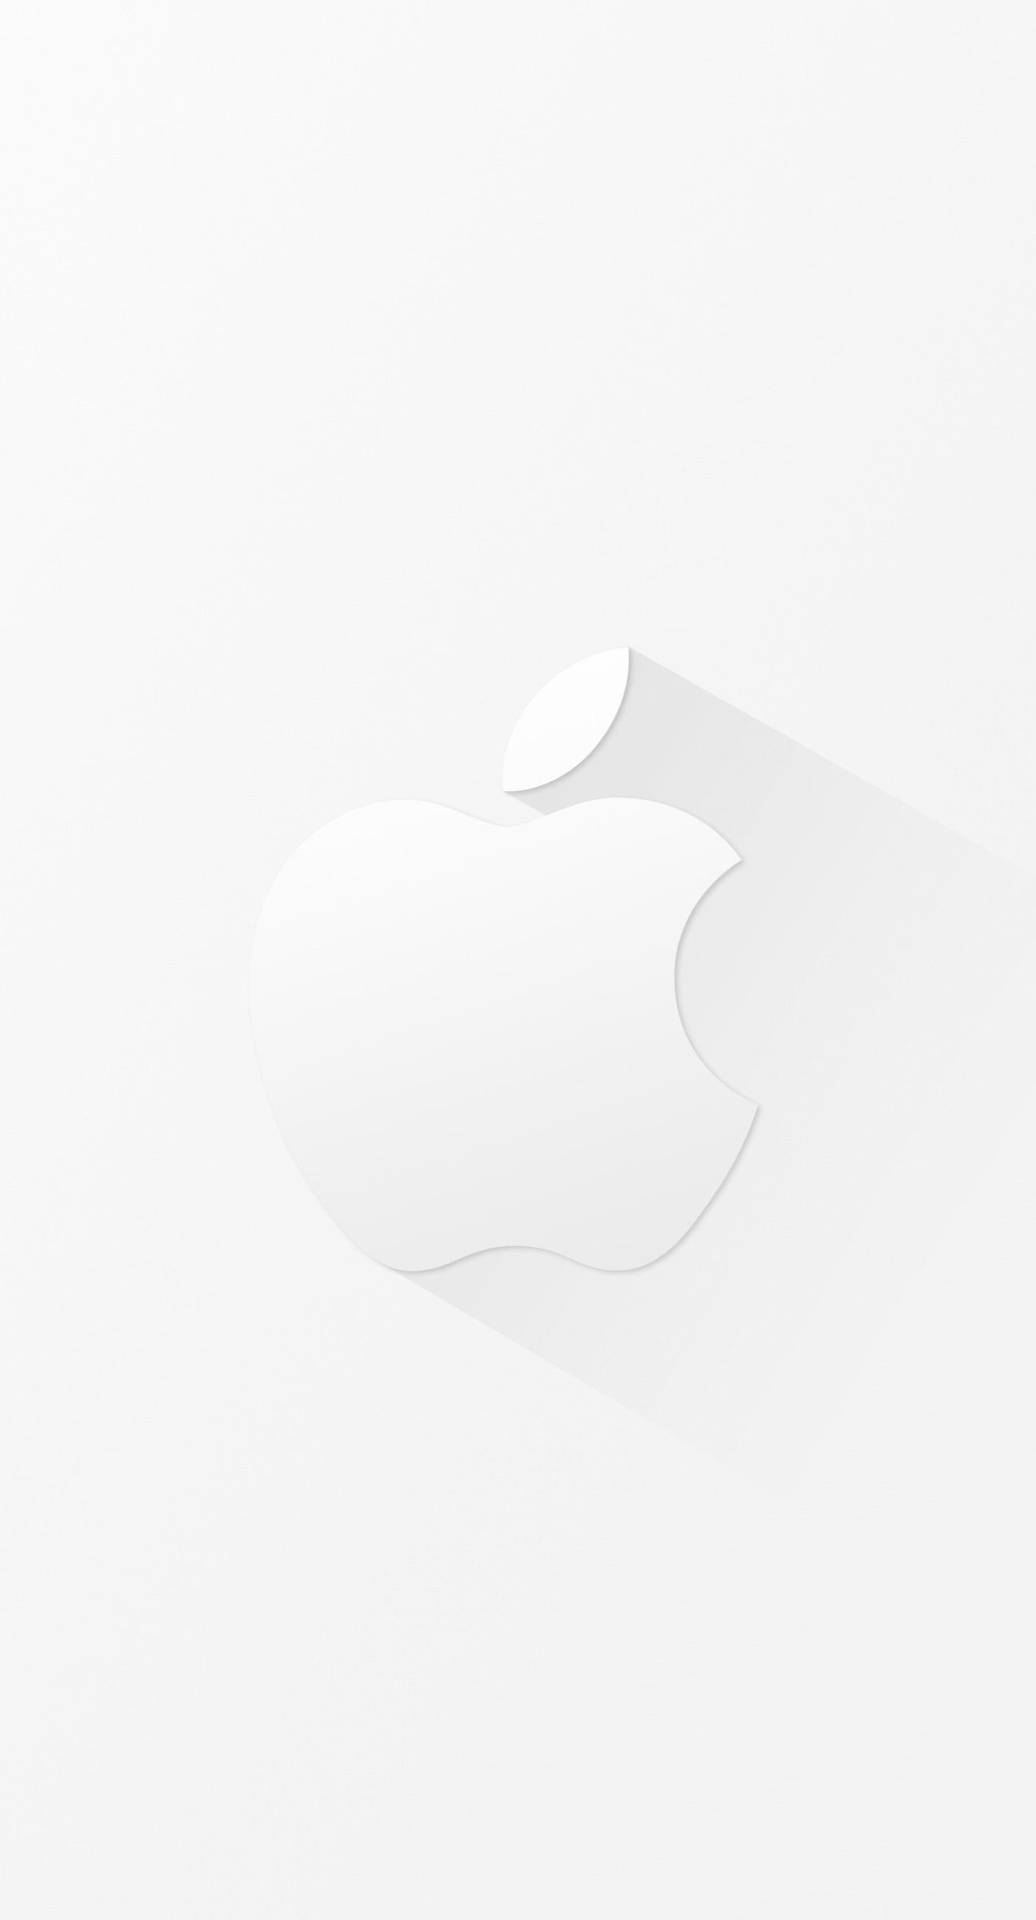 Cool Iphone White Minimalist Apple Logo Wallpaper